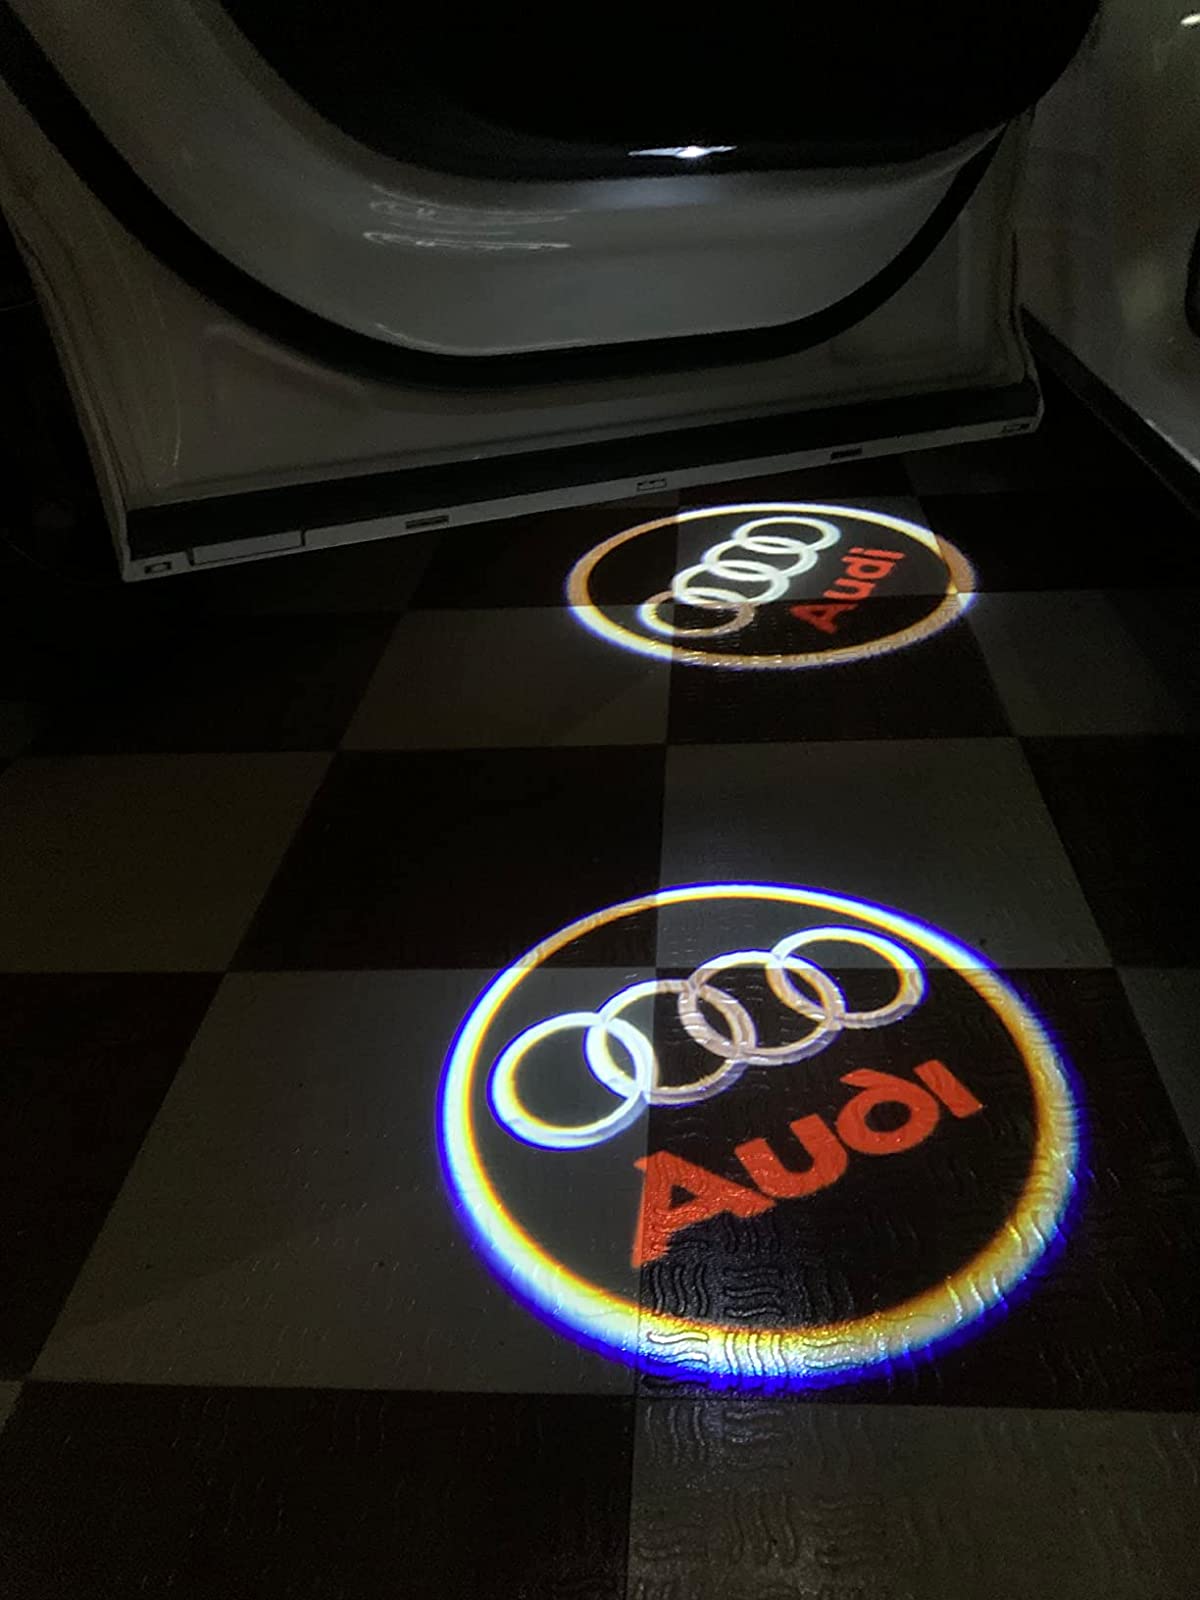 2Pcs Audi 3D LOGO GHOST LASER PROJECTOR DOOR UNDER PUDDLE LIGHTS FOR AUDI A4